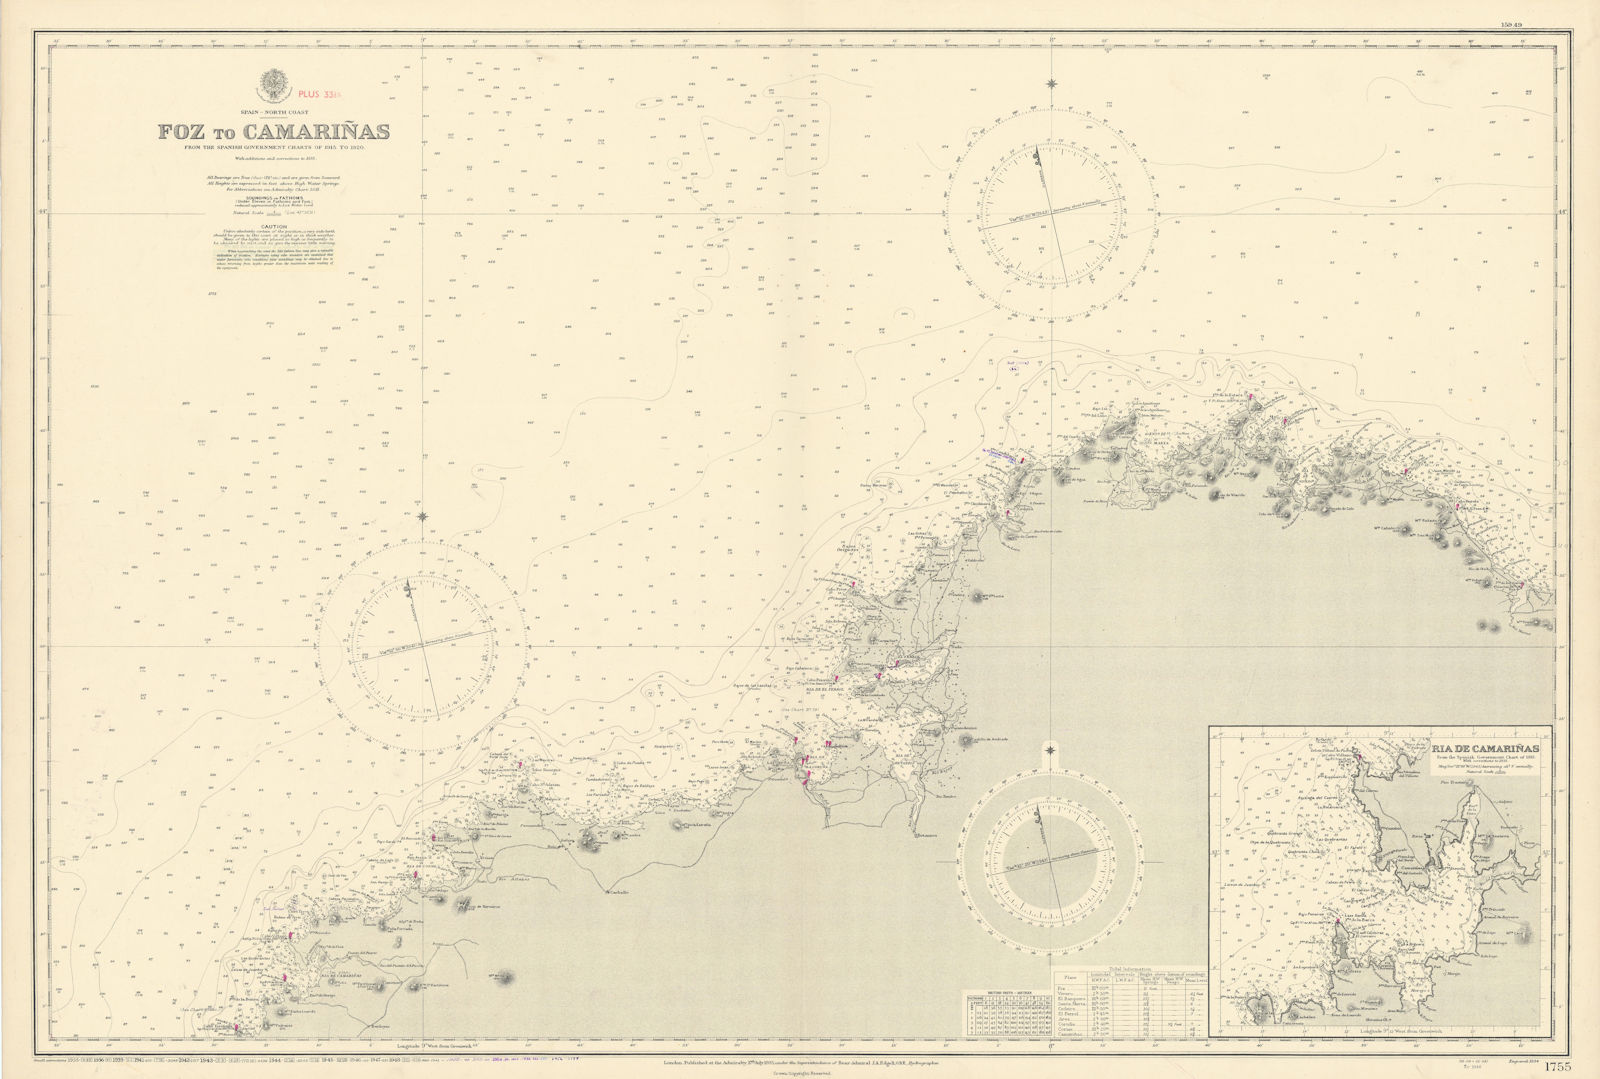 Galicia Spain coast. Foz-Camariñas La Coruña ADMIRALTY sea chart 1935 (1956) map